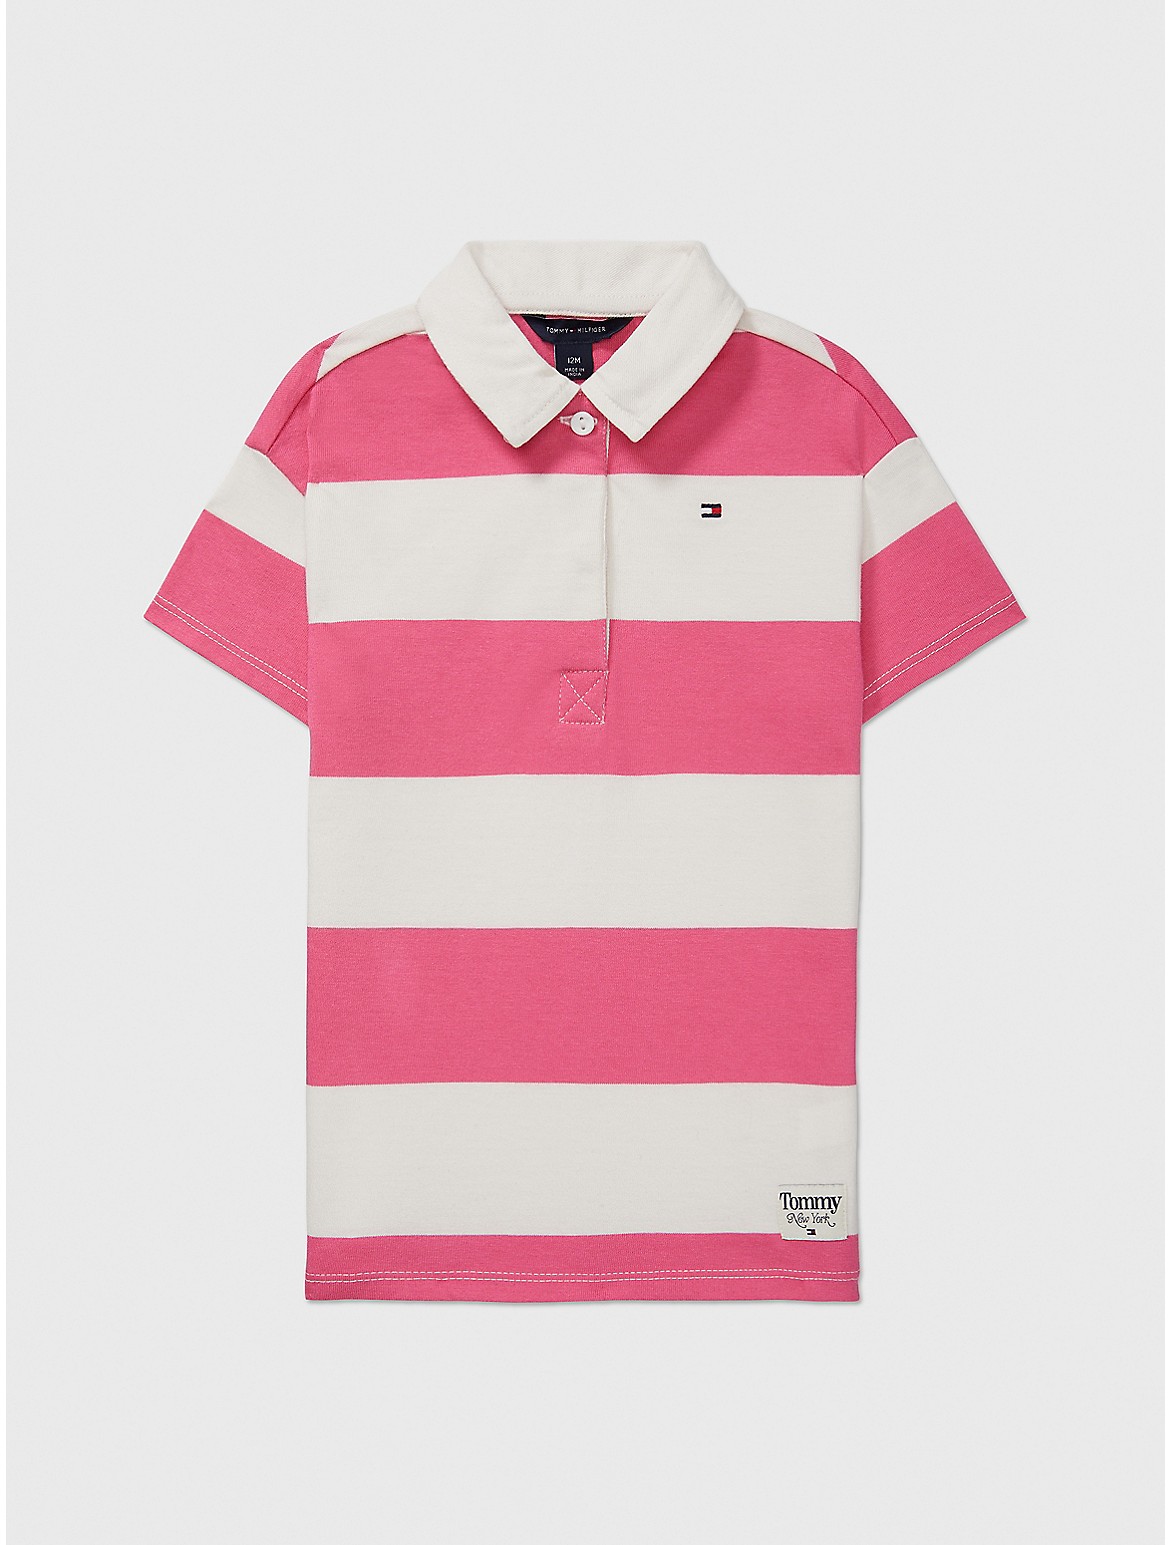 Tommy Hilfiger Girls' Babies' Rugby Stripe Dress - Pink - 12M